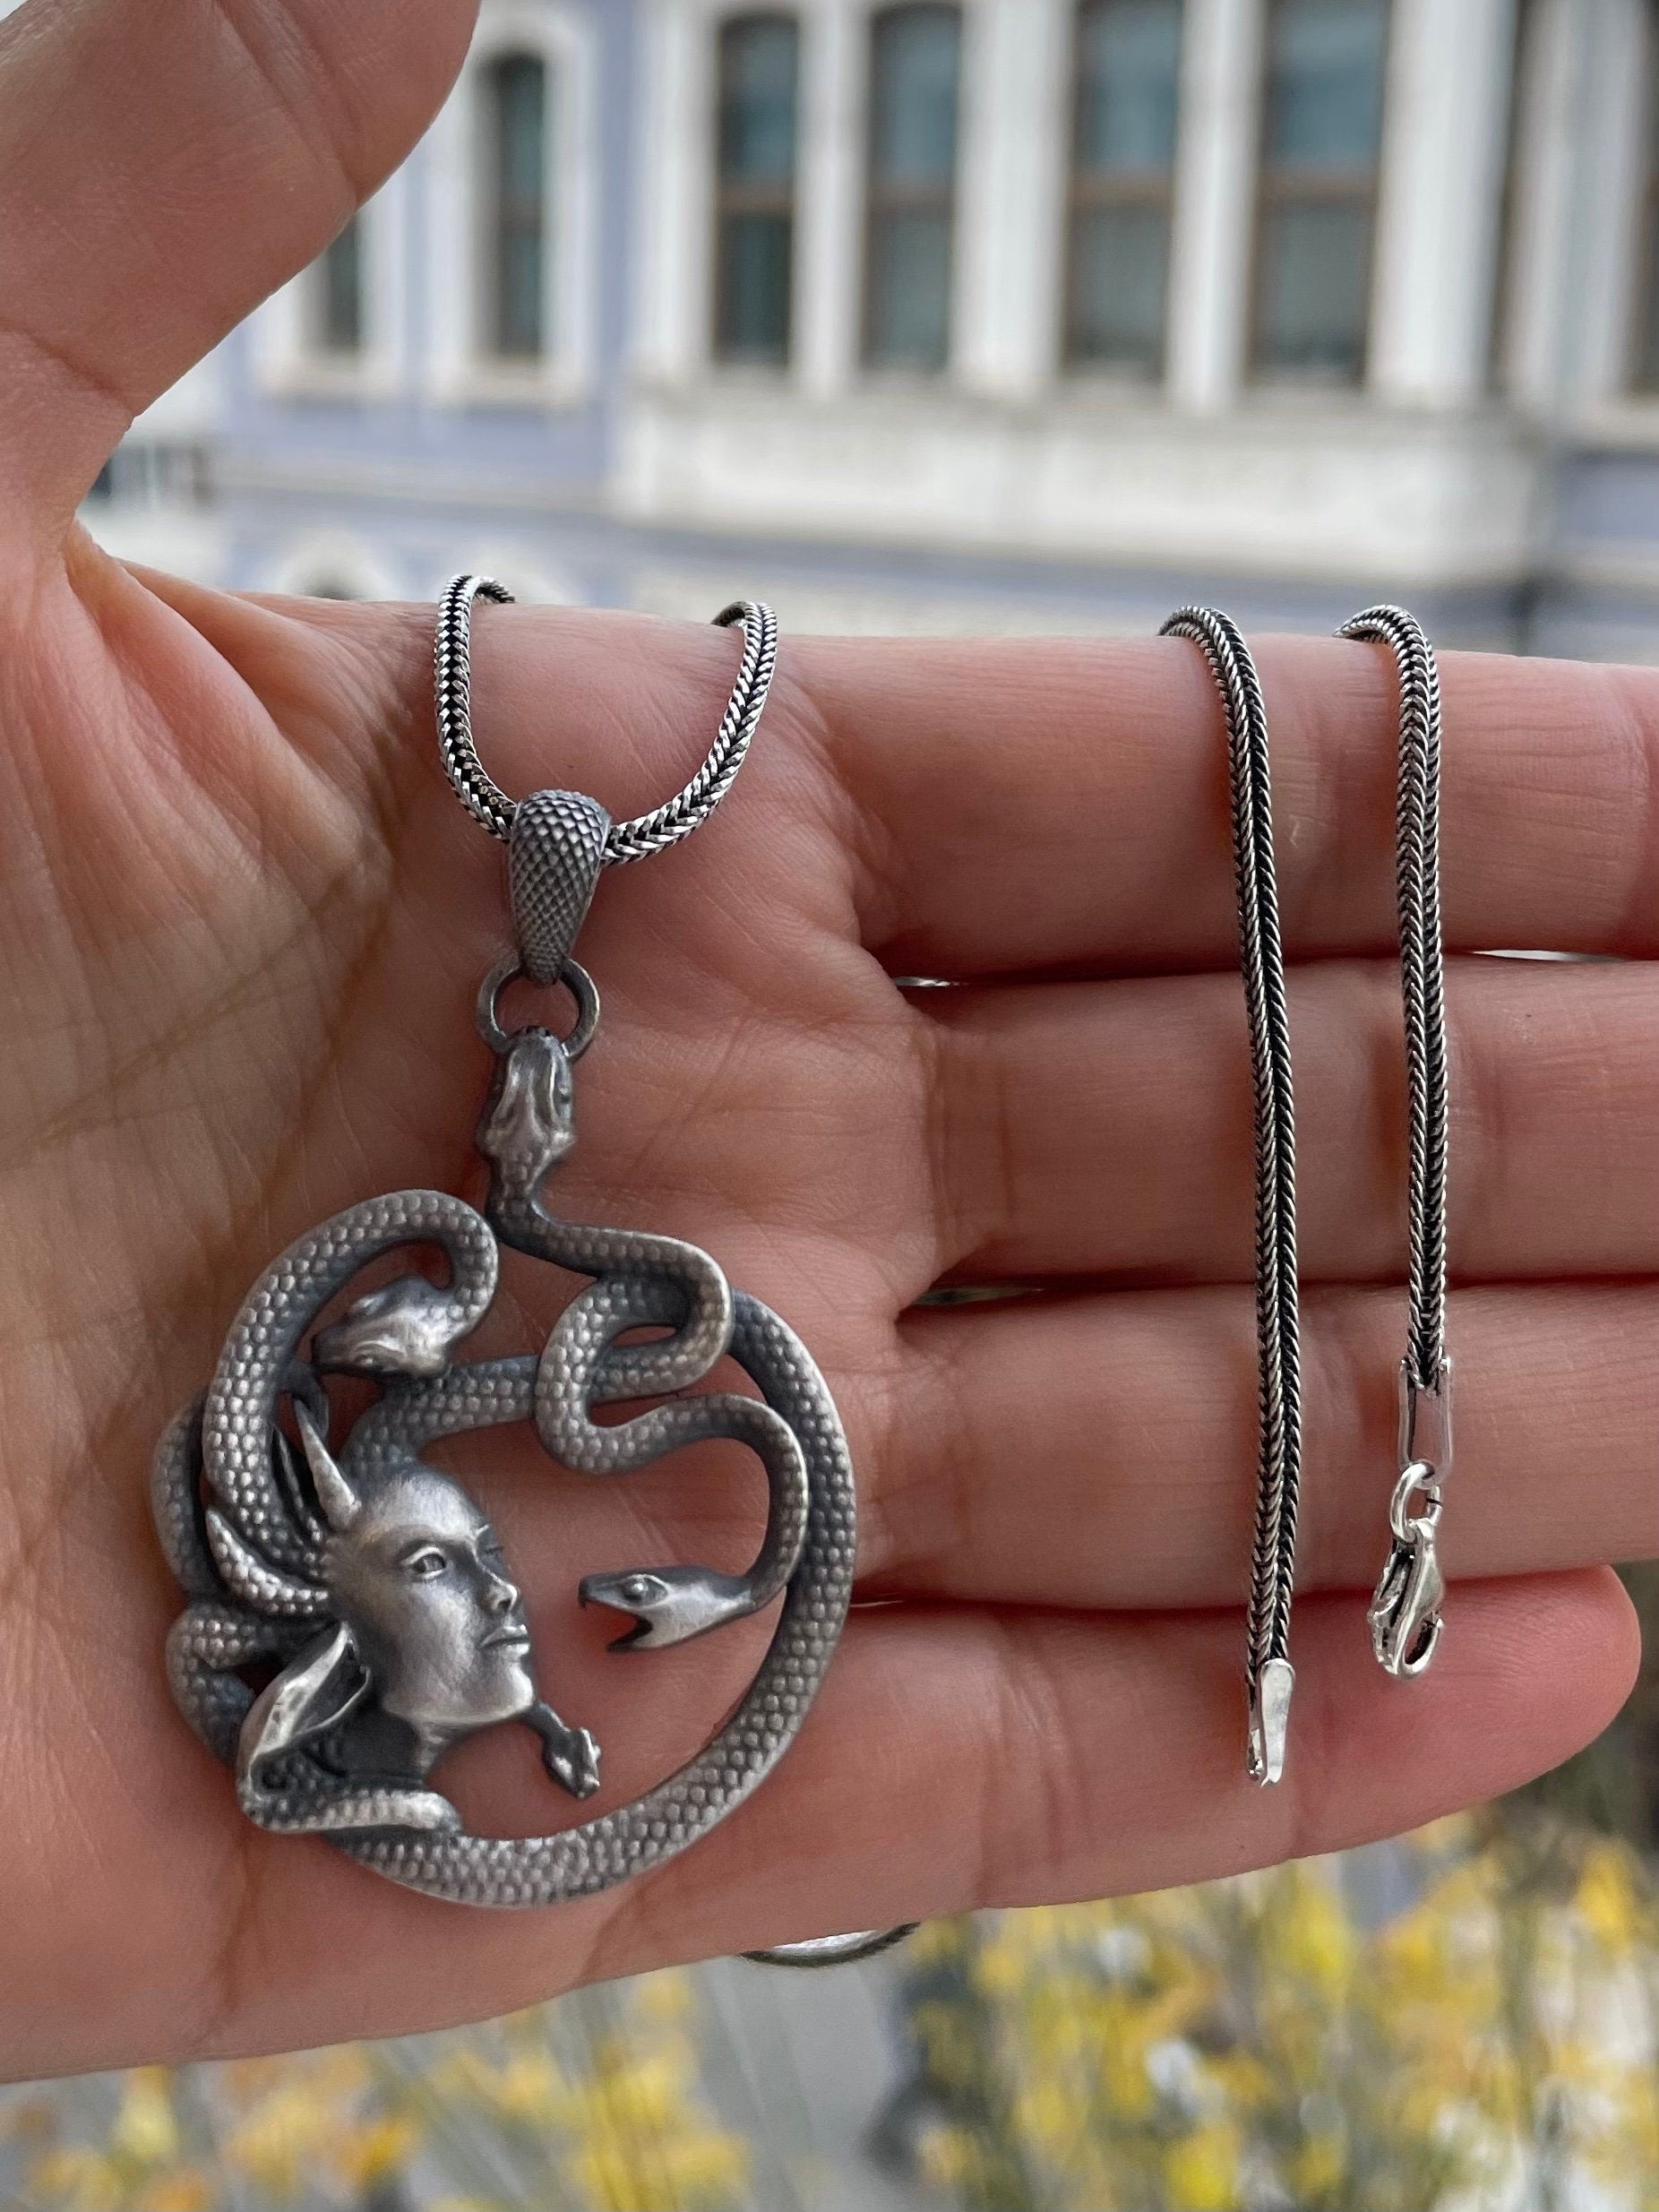 Medusa Necklace Greek Mythology Sterling Silver Pendant 